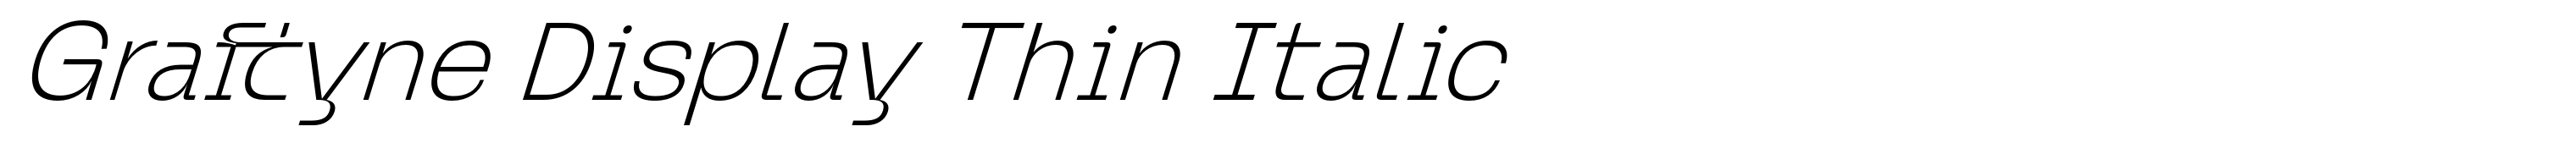 Graftyne Display Thin Italic